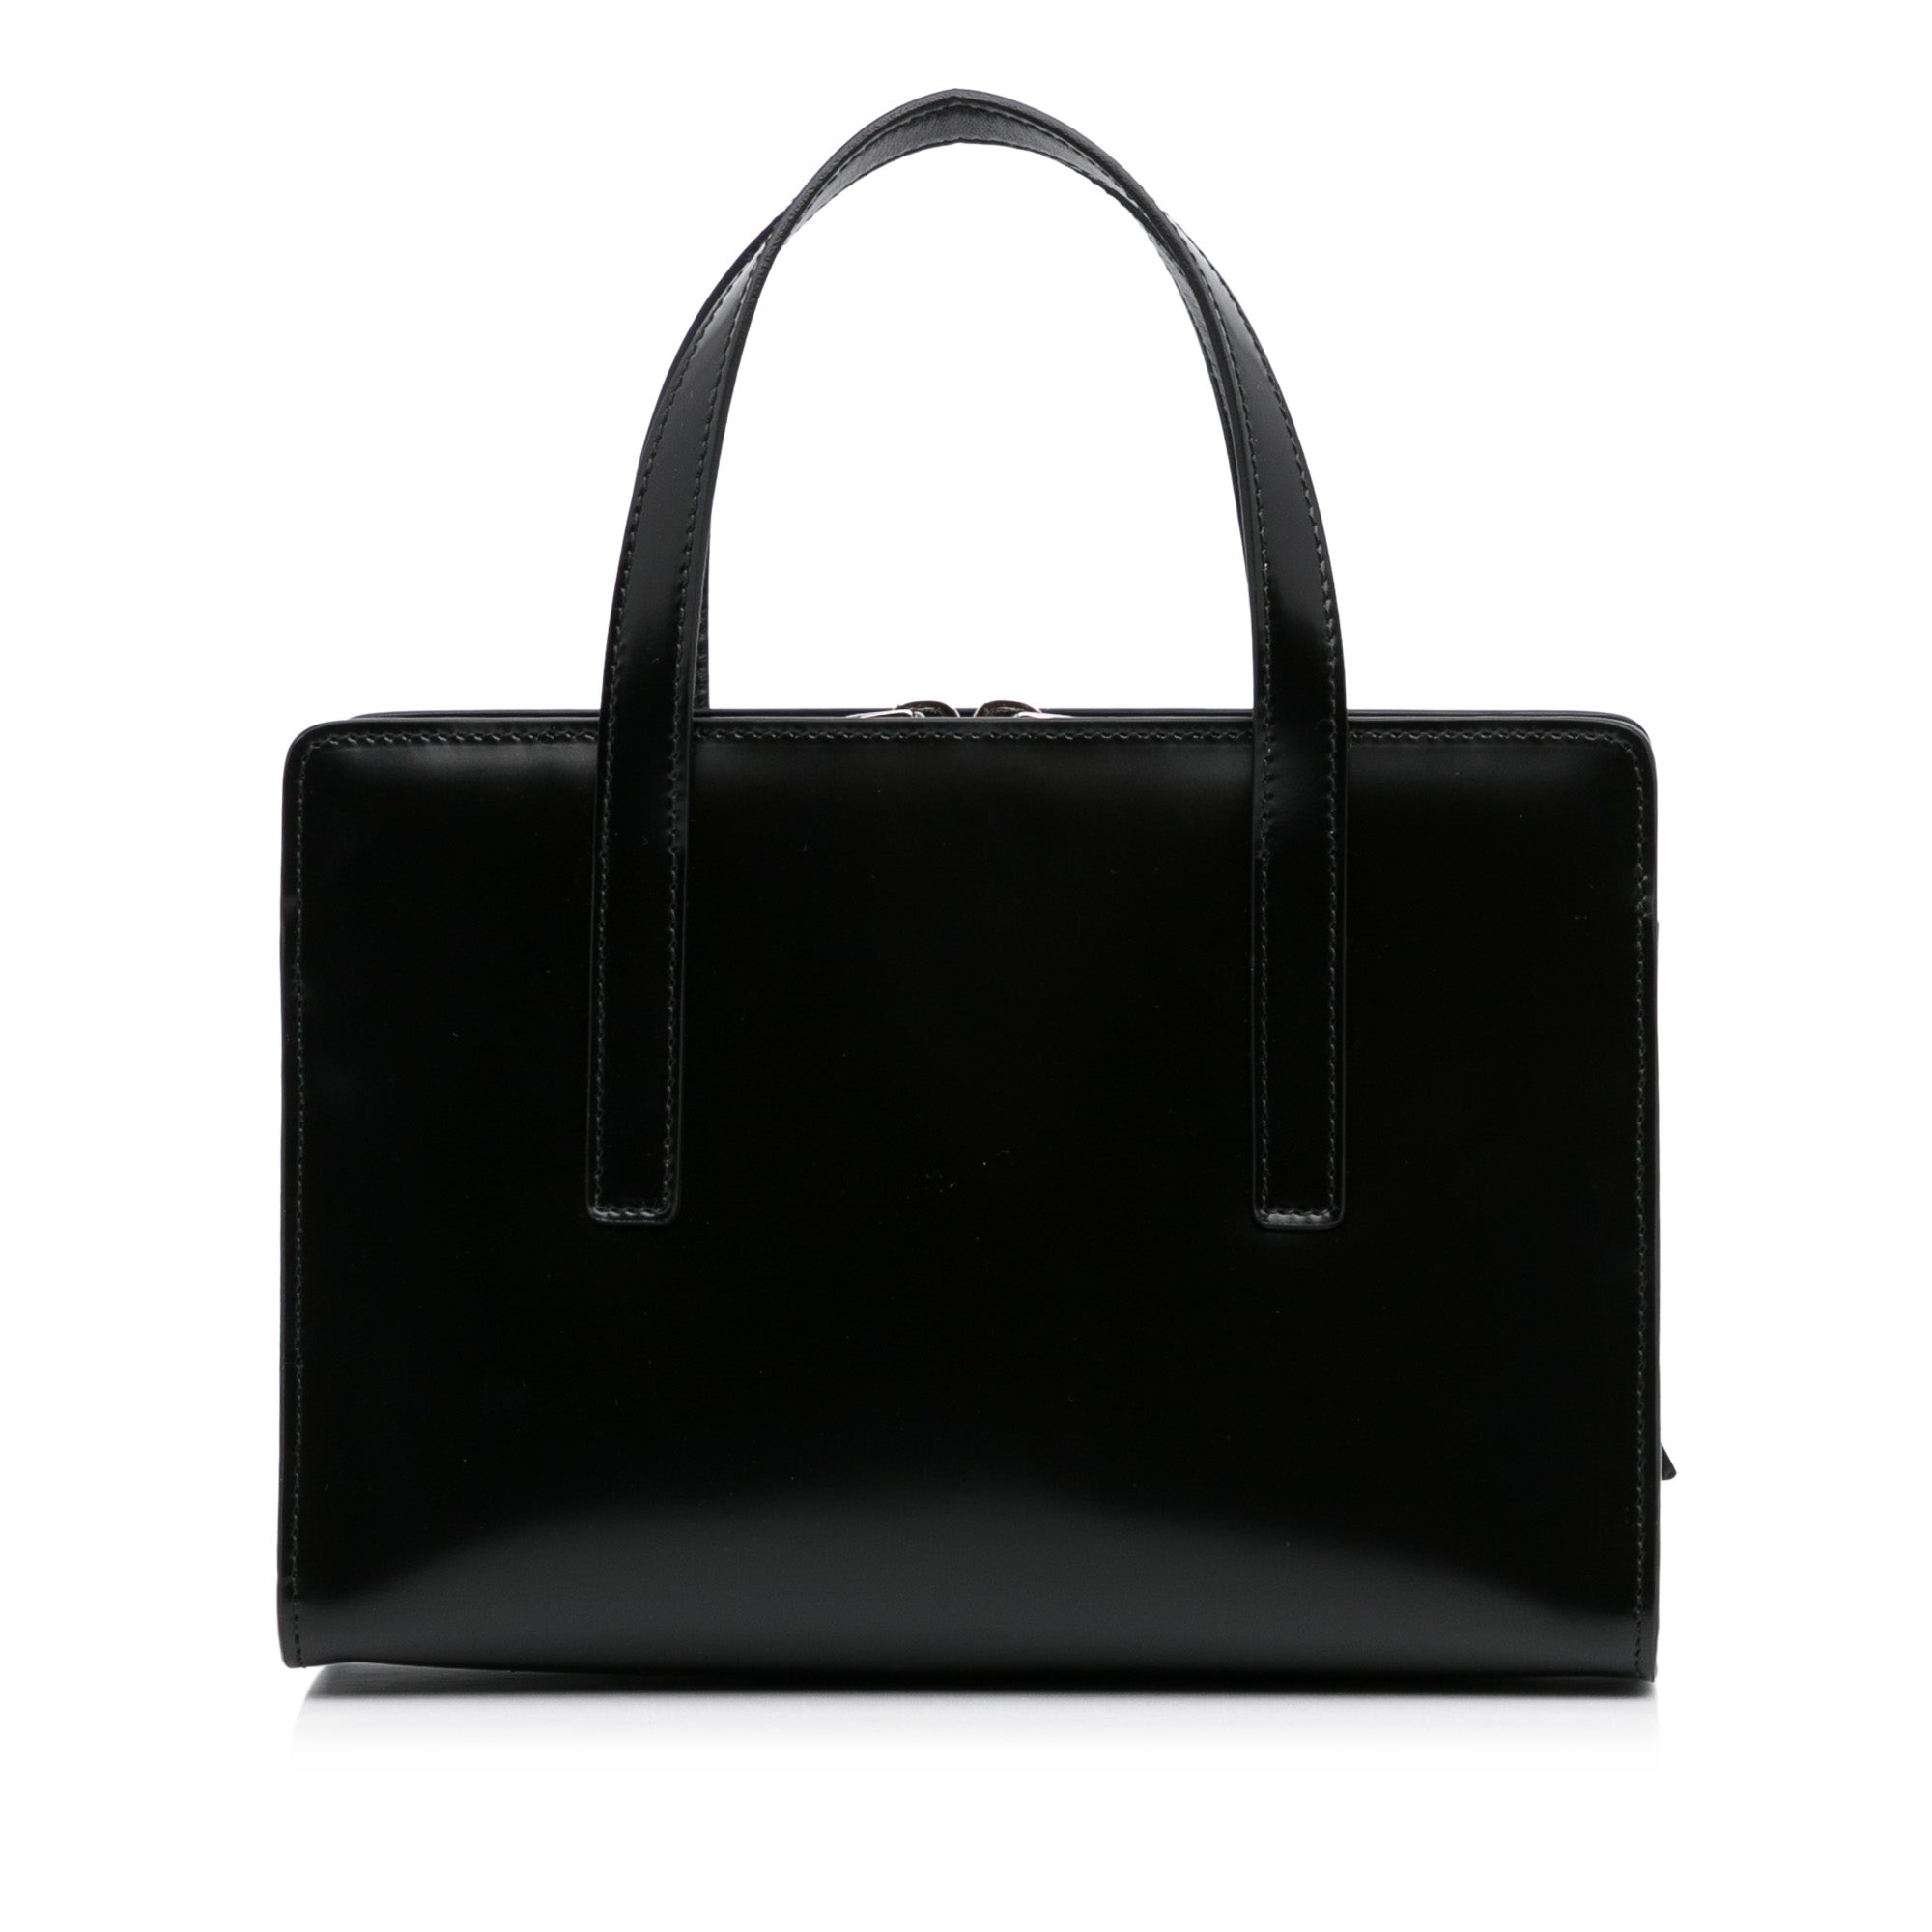 Giorgio Armani - Authenticated Handbag - Silk Black Plain for Women, Very Good Condition